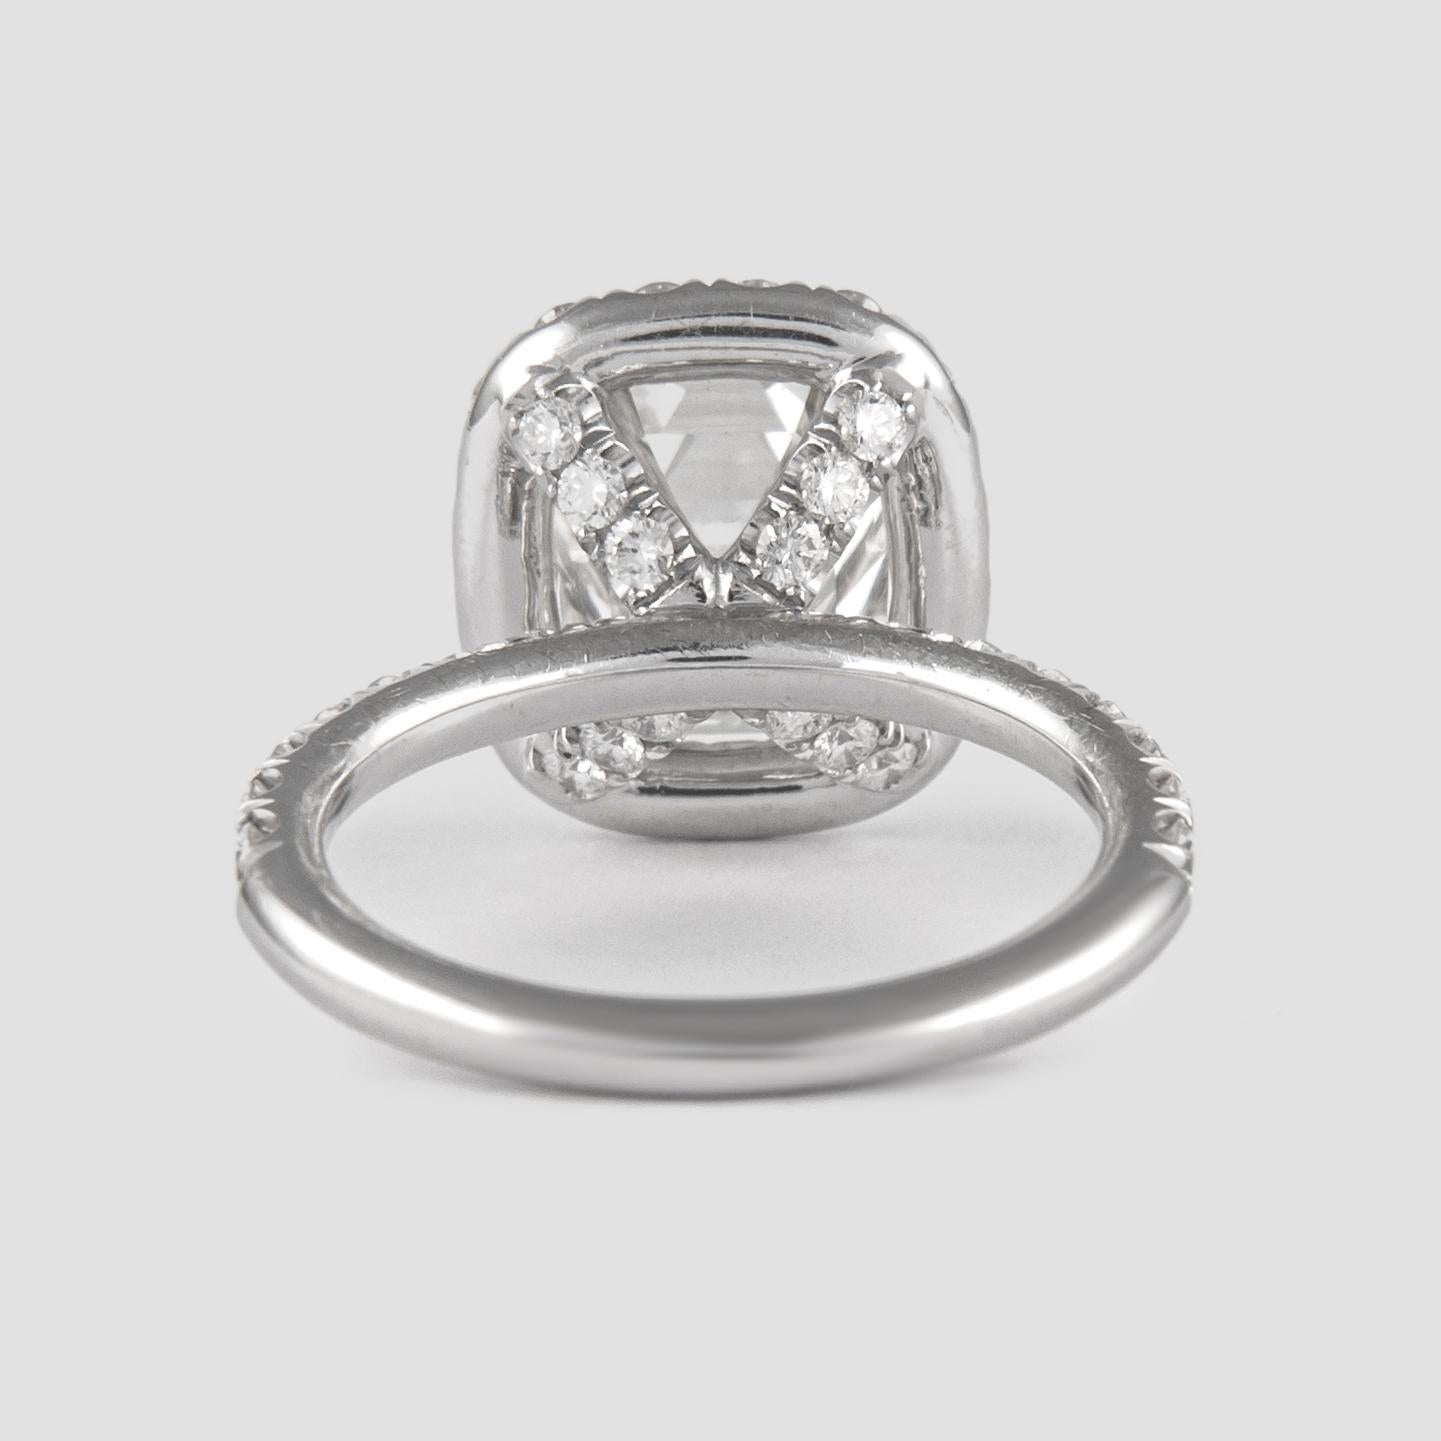 Women's EGL 3.99 Carat Emerald Cut Diamond Ring with an Eternity Band 18k White Gold